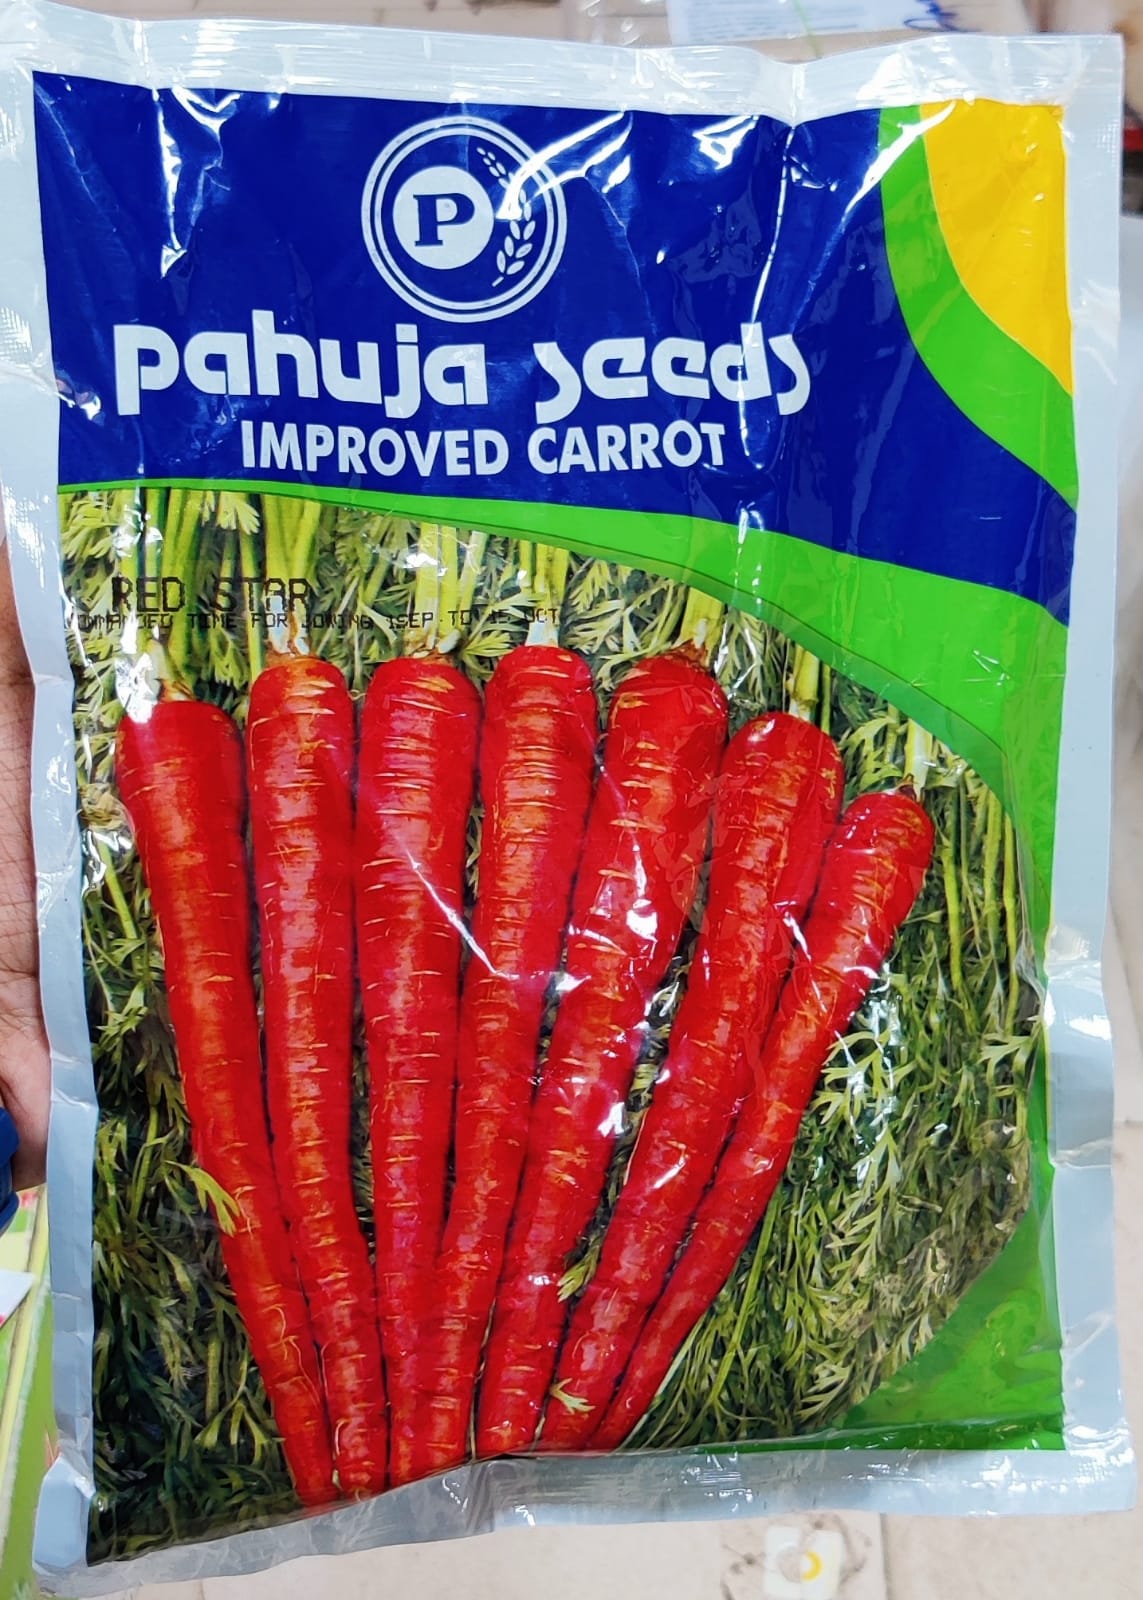 Carrot Red Star (Pahuja Seeds)